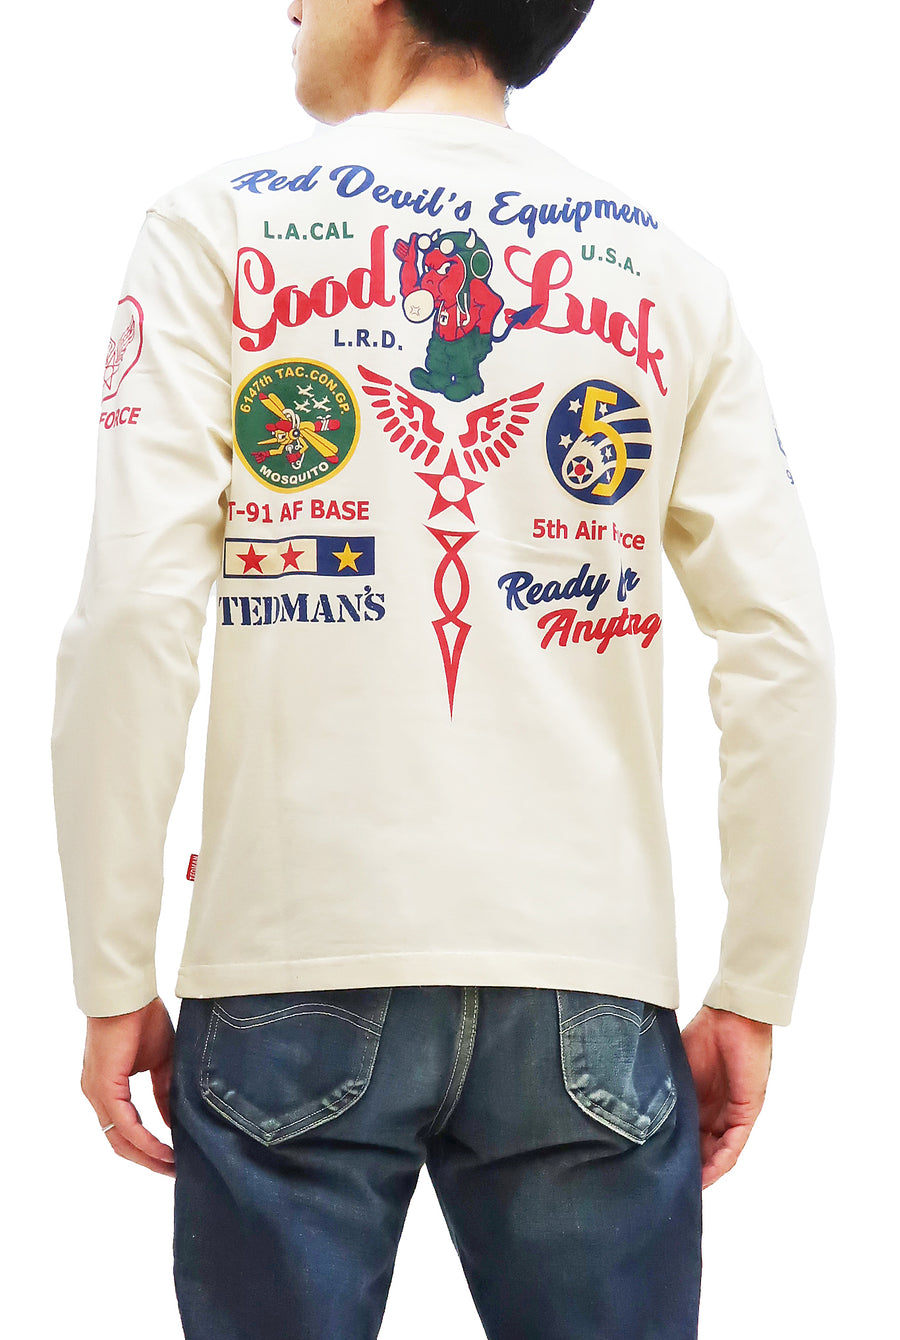 Tedman T-Shirt Men's Lucky Devil Military Graphic Long Sleeve Tee Efu-Shokai TDLS-349 Off-White